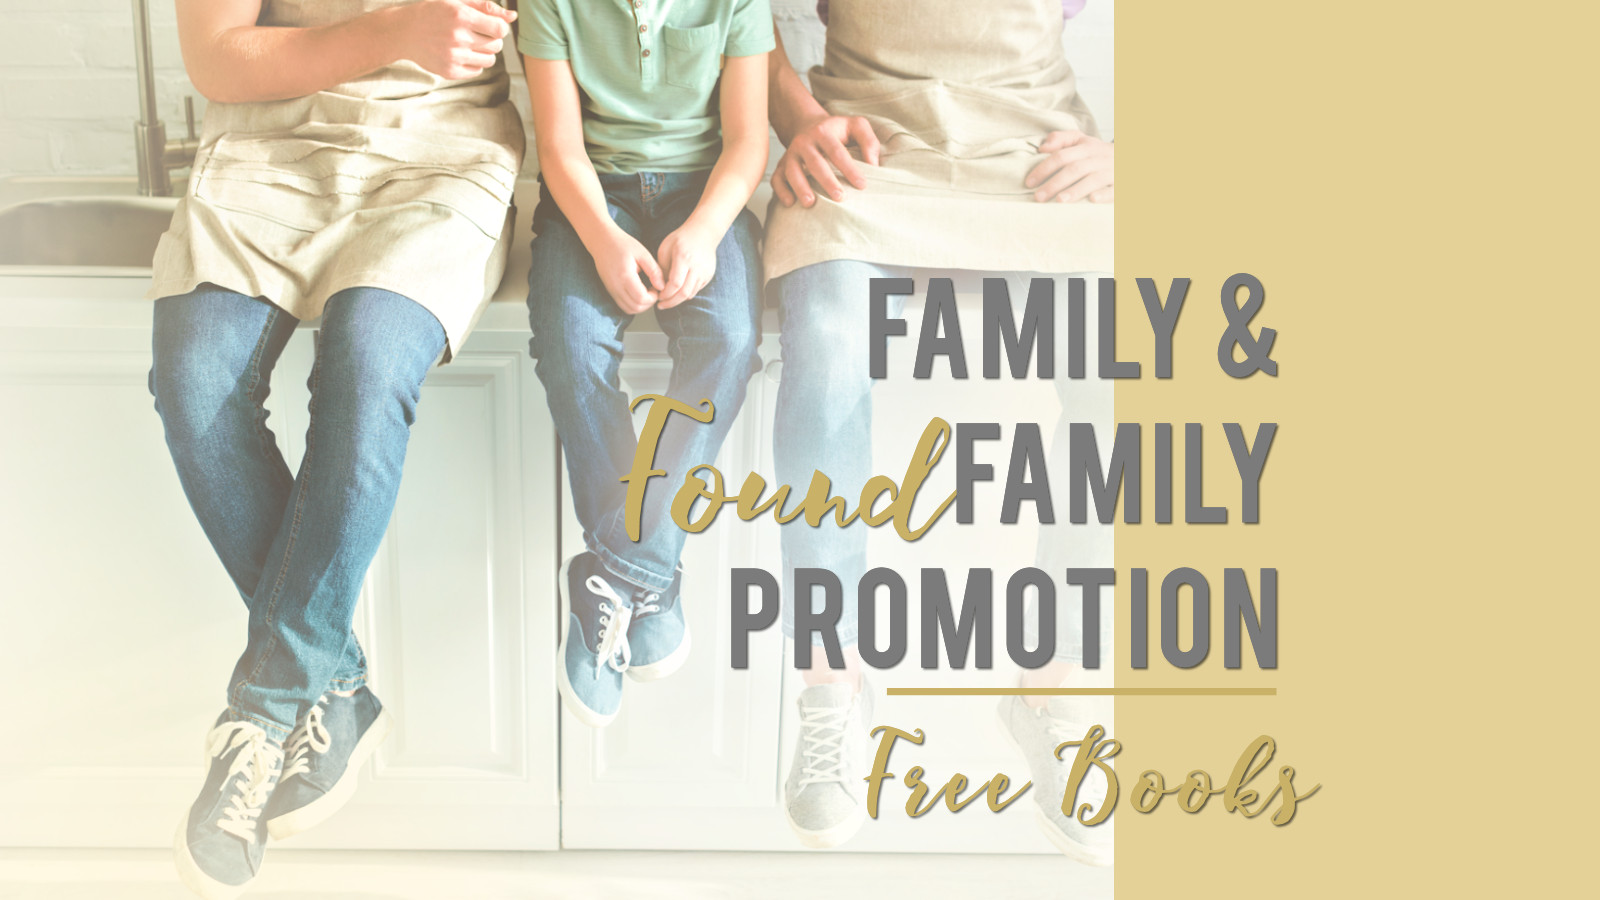 Focus on Family Promotion Free Books MMRomance MMAuthors RJ Scott